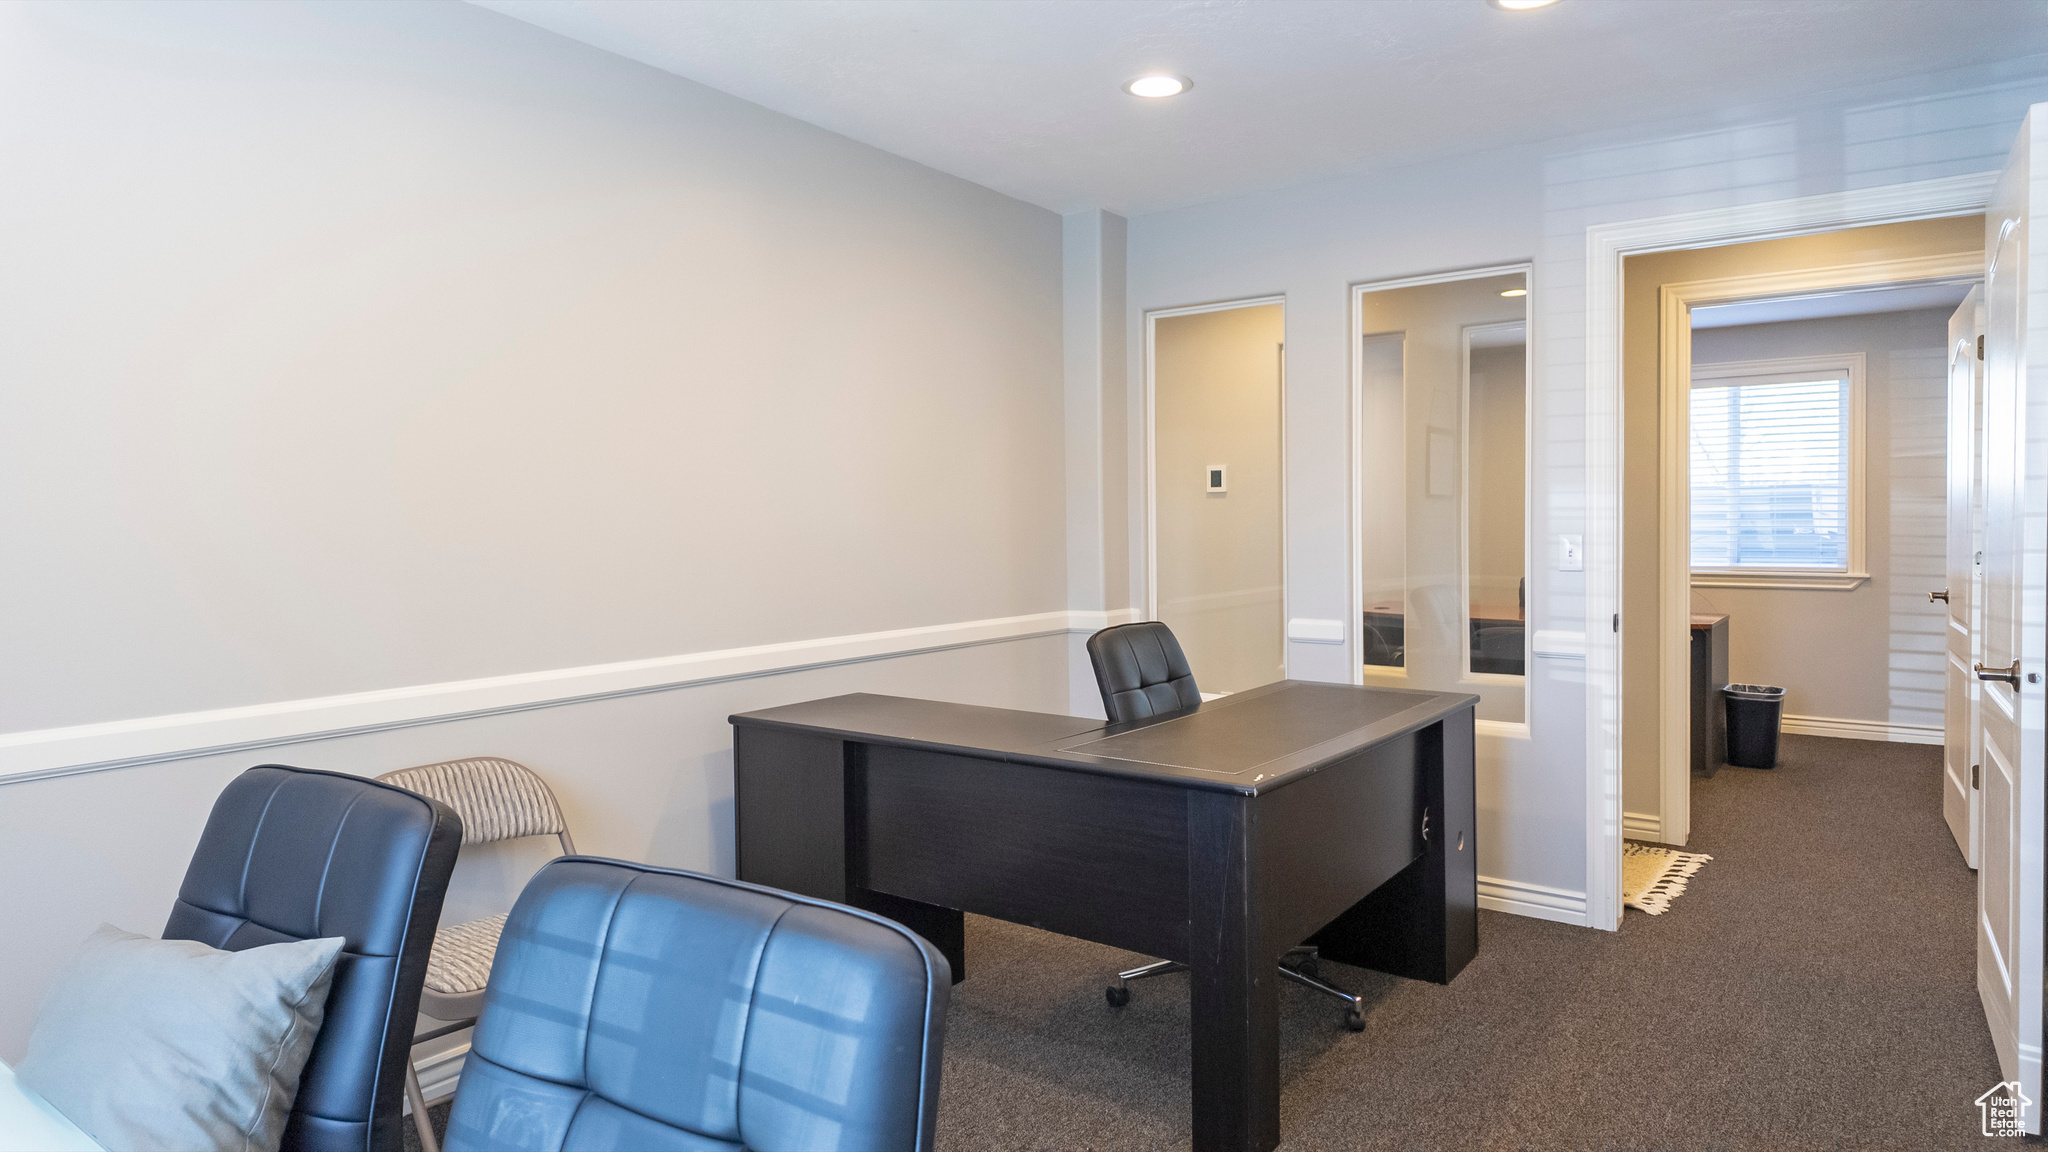 Office area with dark carpet